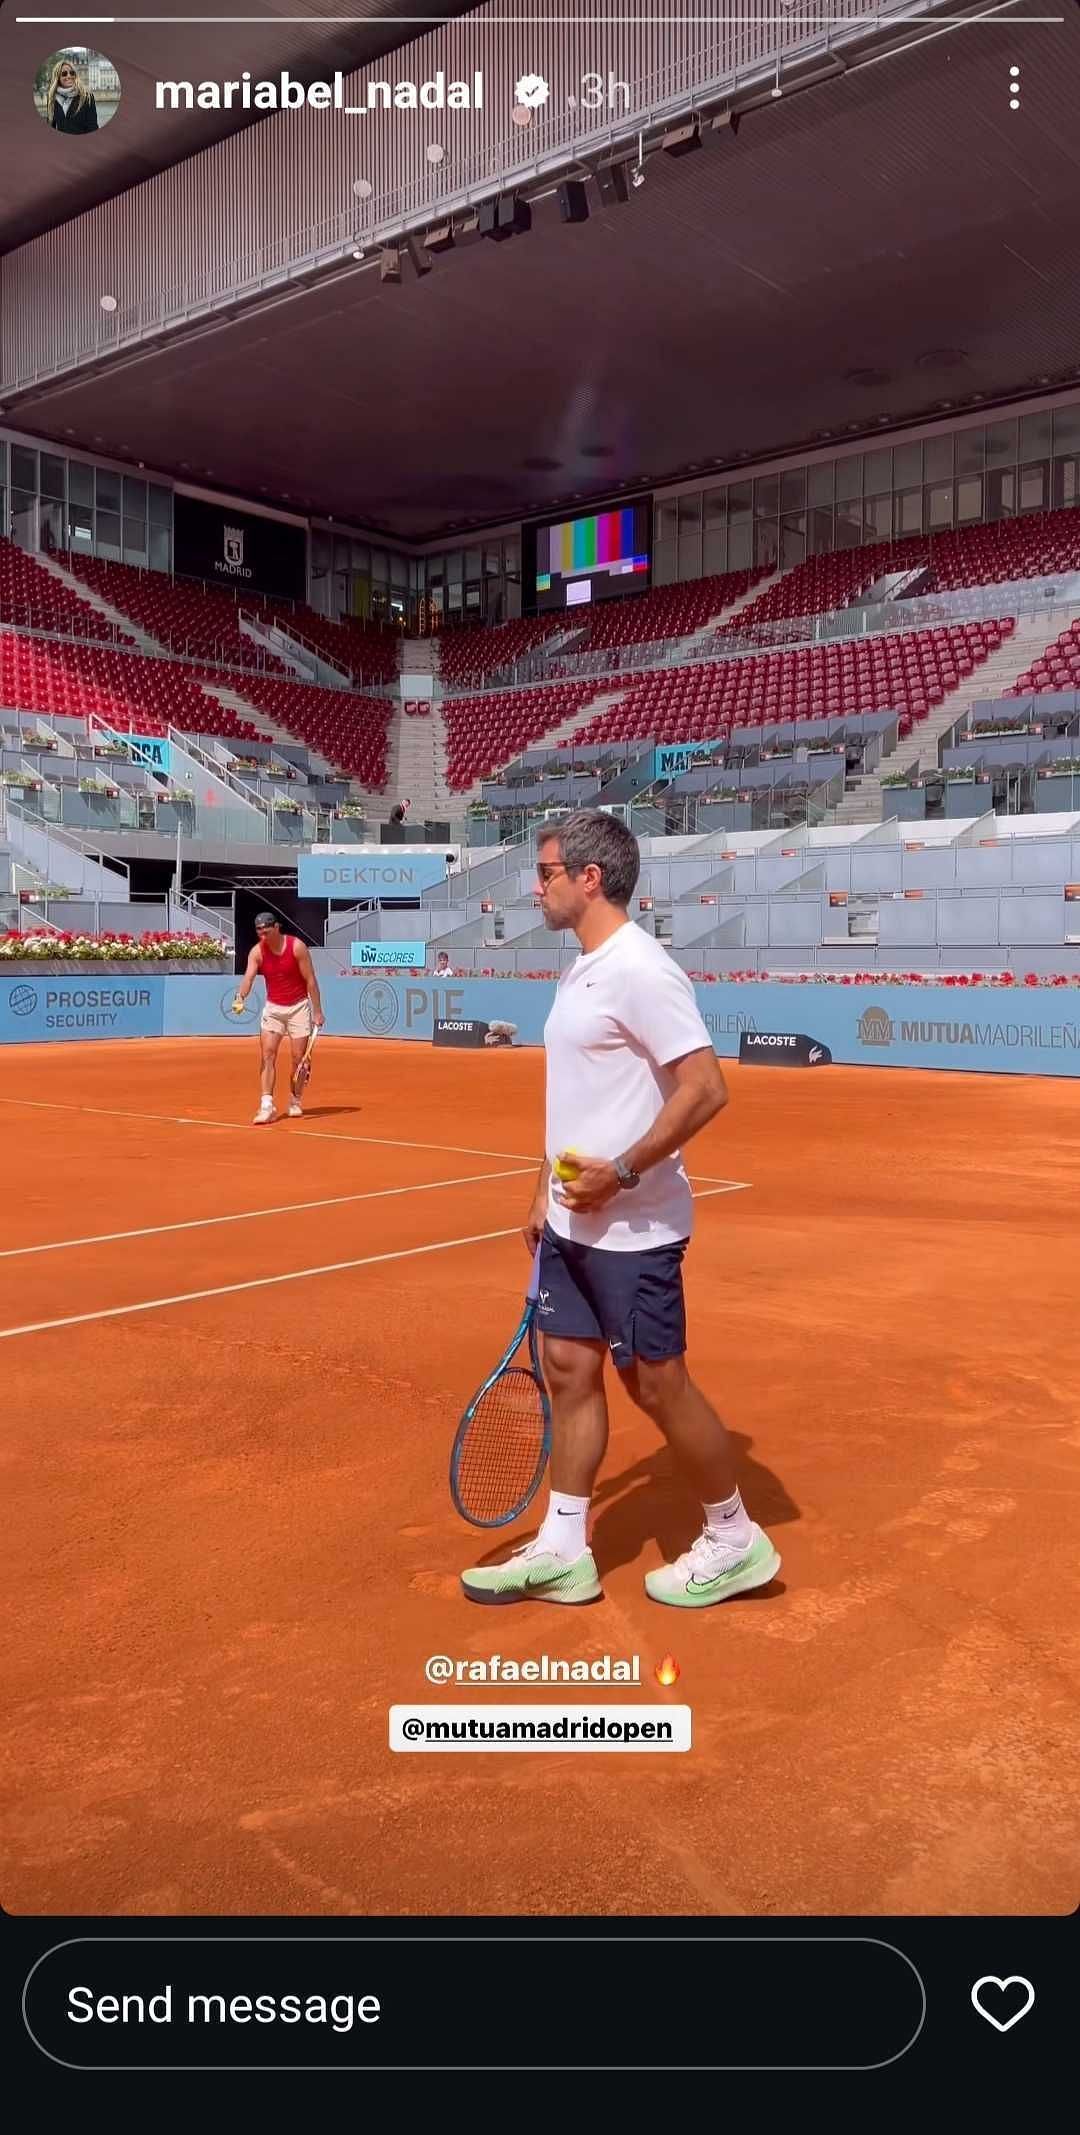 Maribel Nadal on Instagram